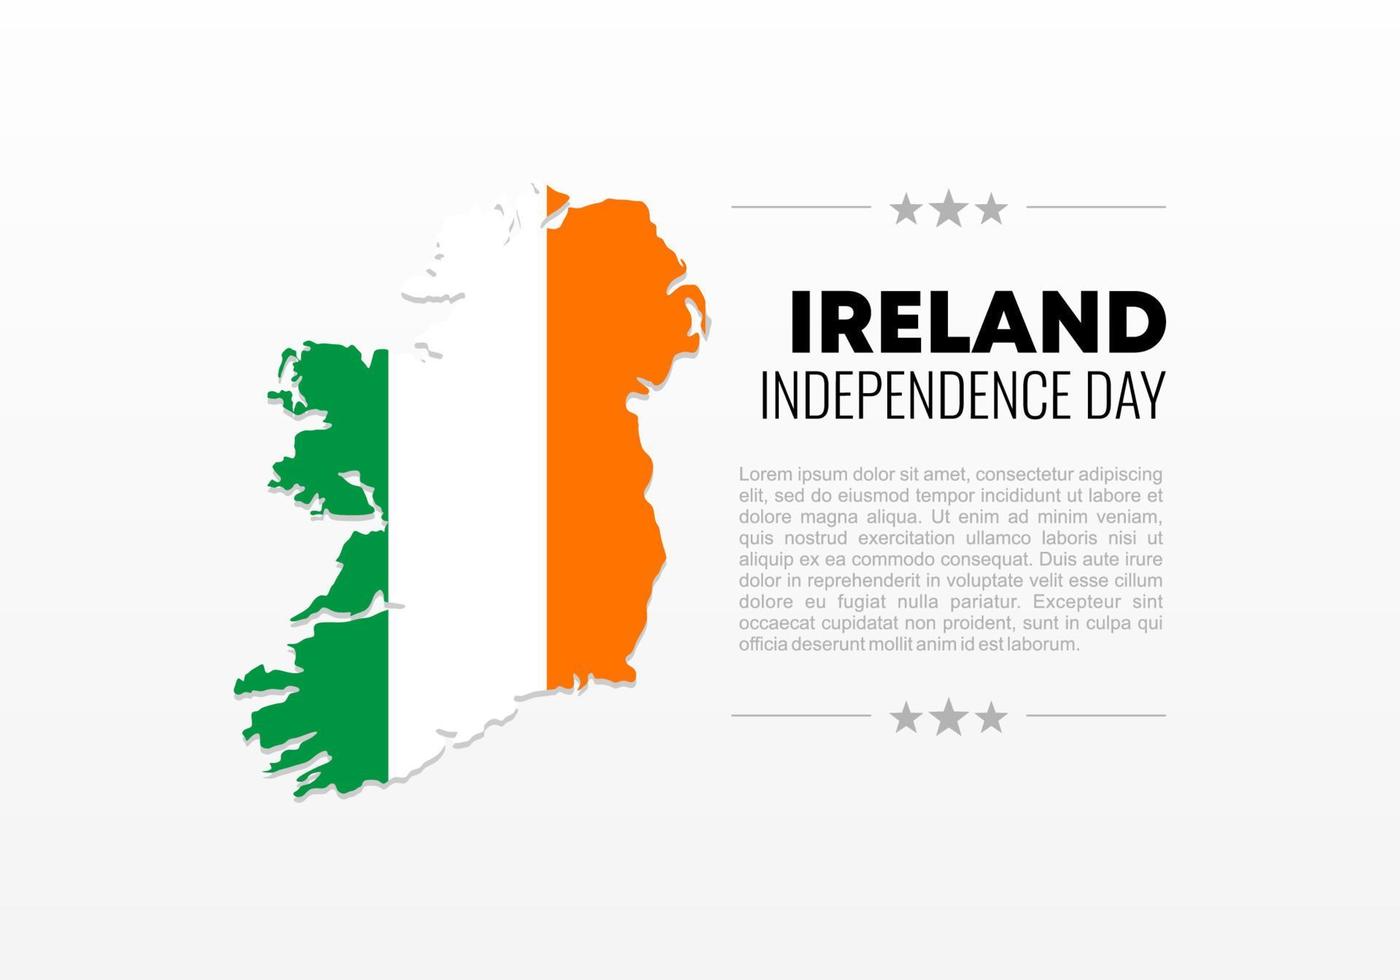 Ireland independence day background poster for national celebration. vector